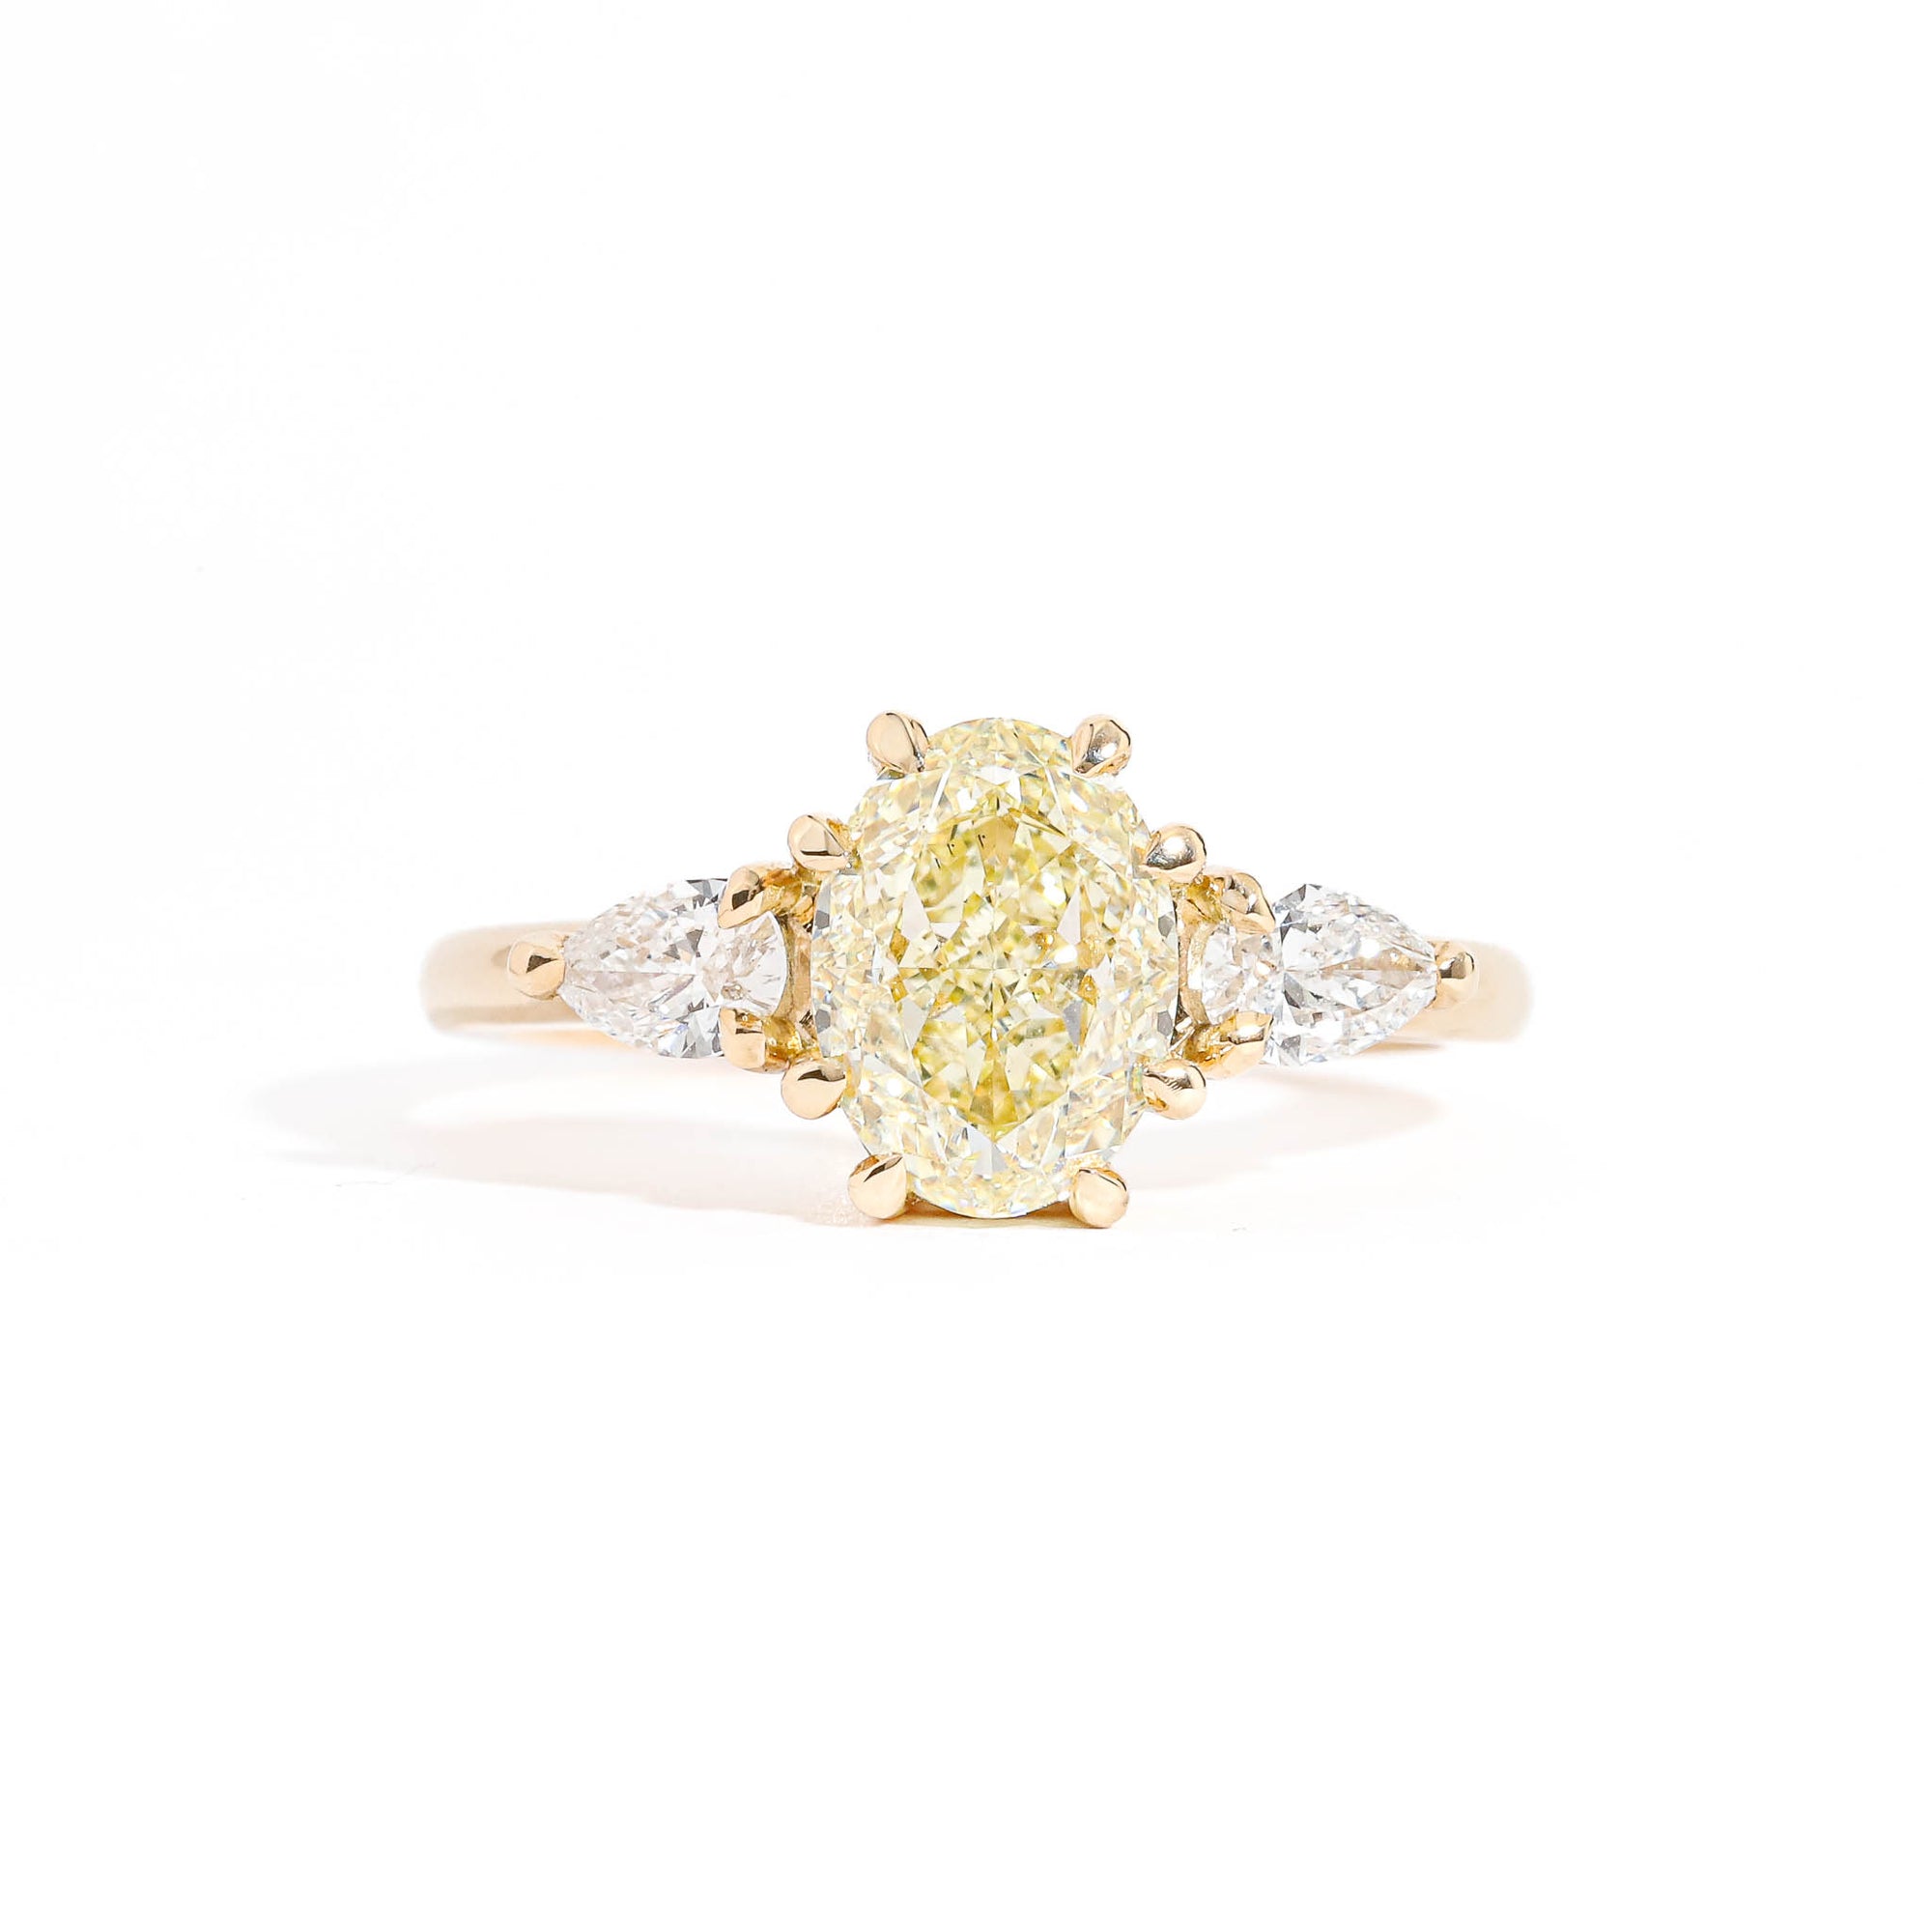 Oval Cut Diamond Ring with Pear Cut Diamond Ring in 18 Carat Yellow Gold